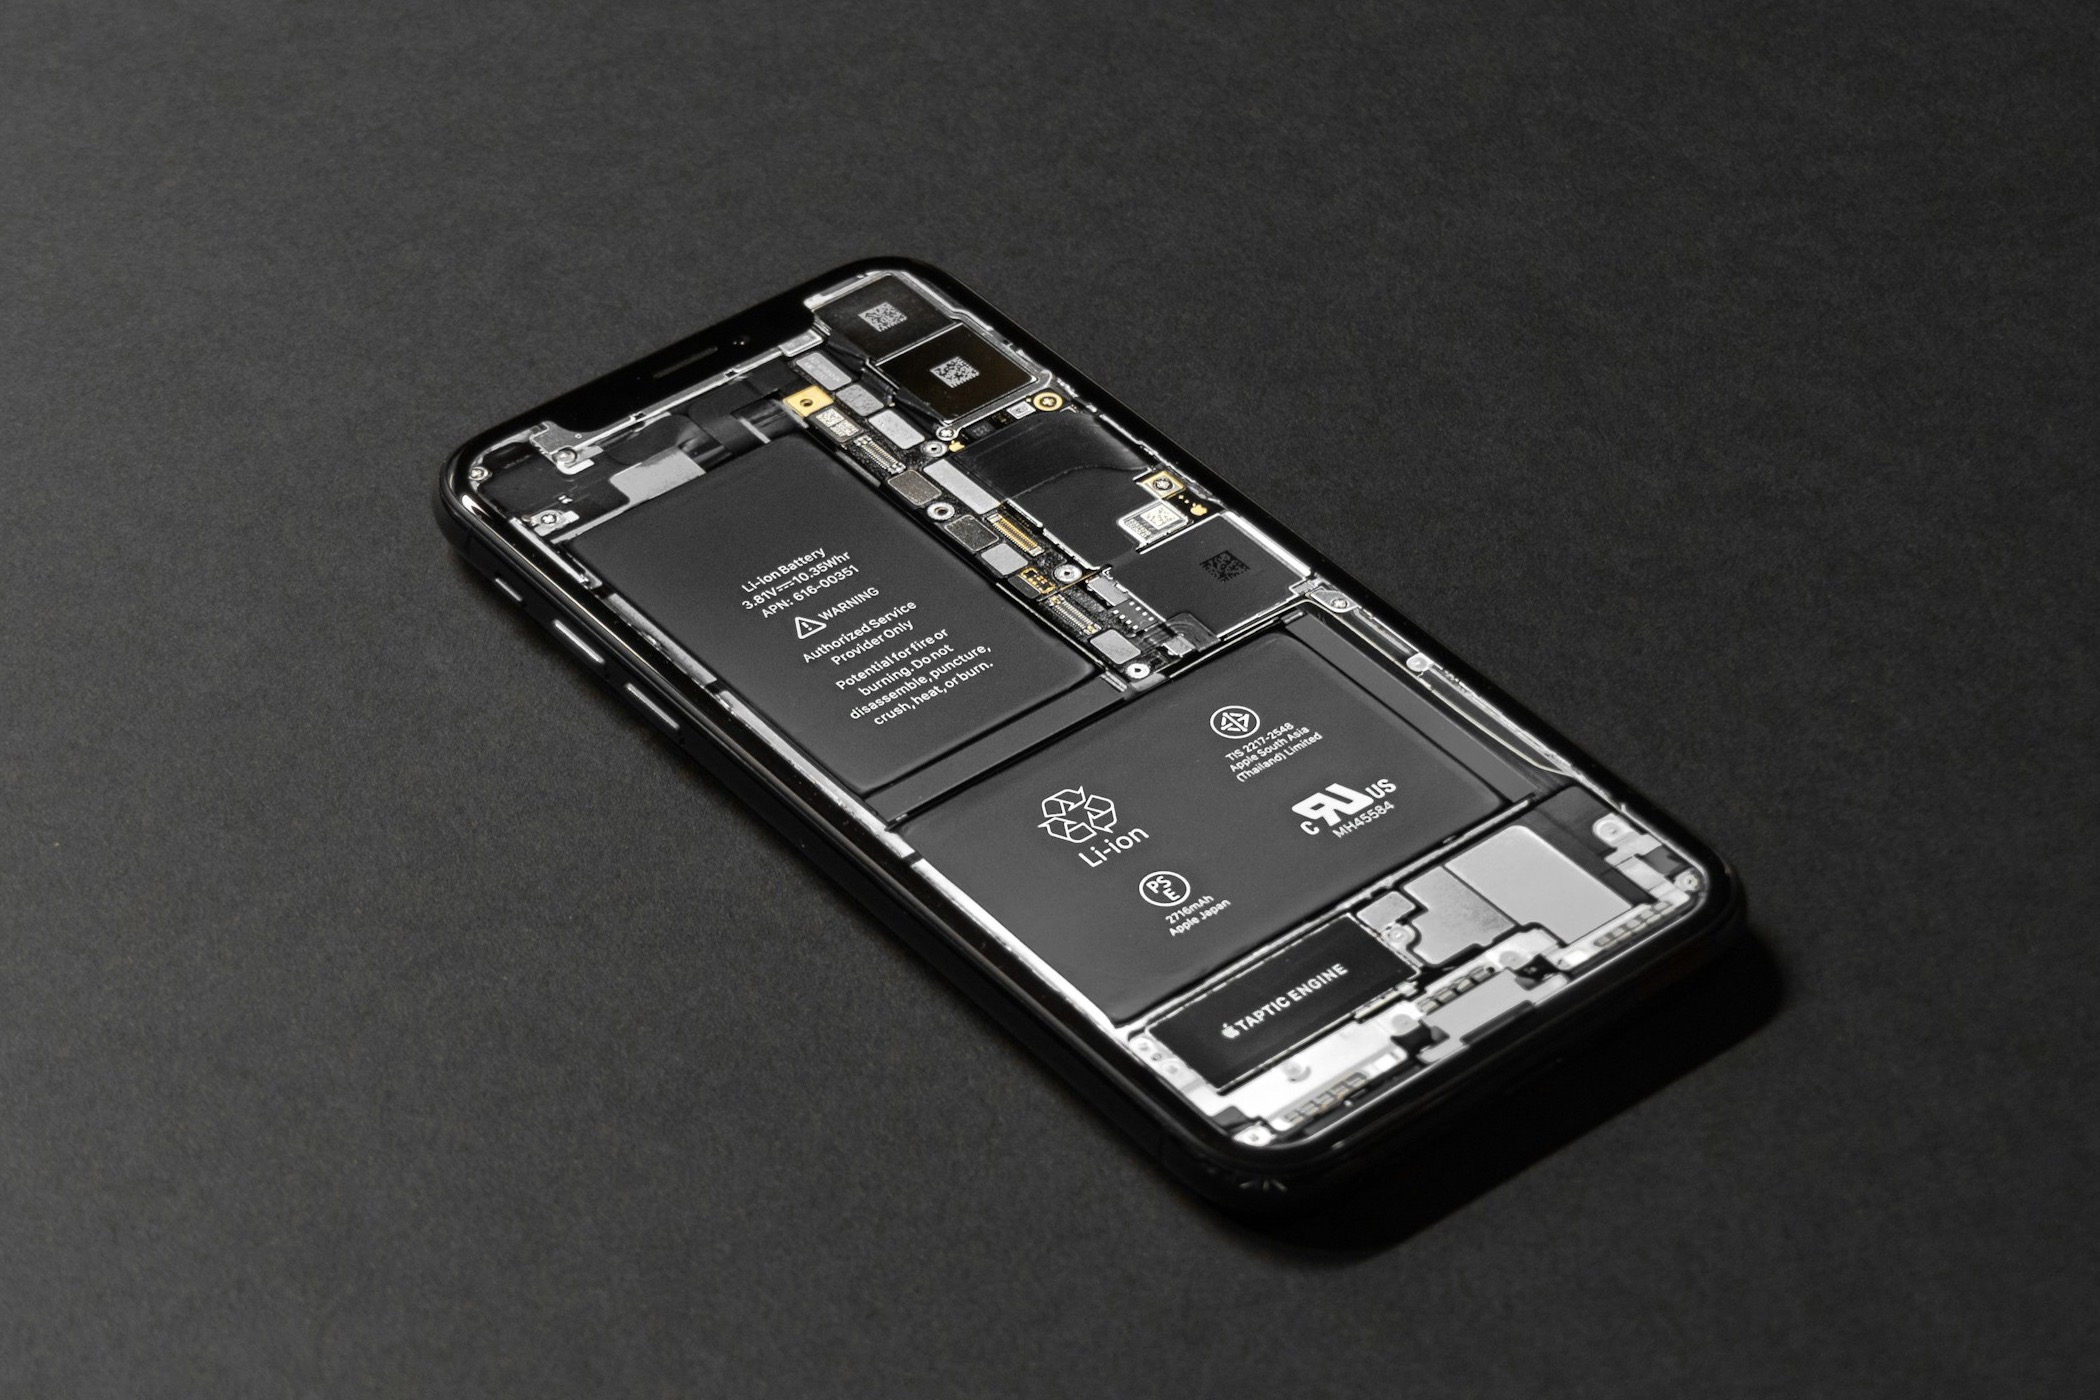 Аккумулятор внутри iPhone.